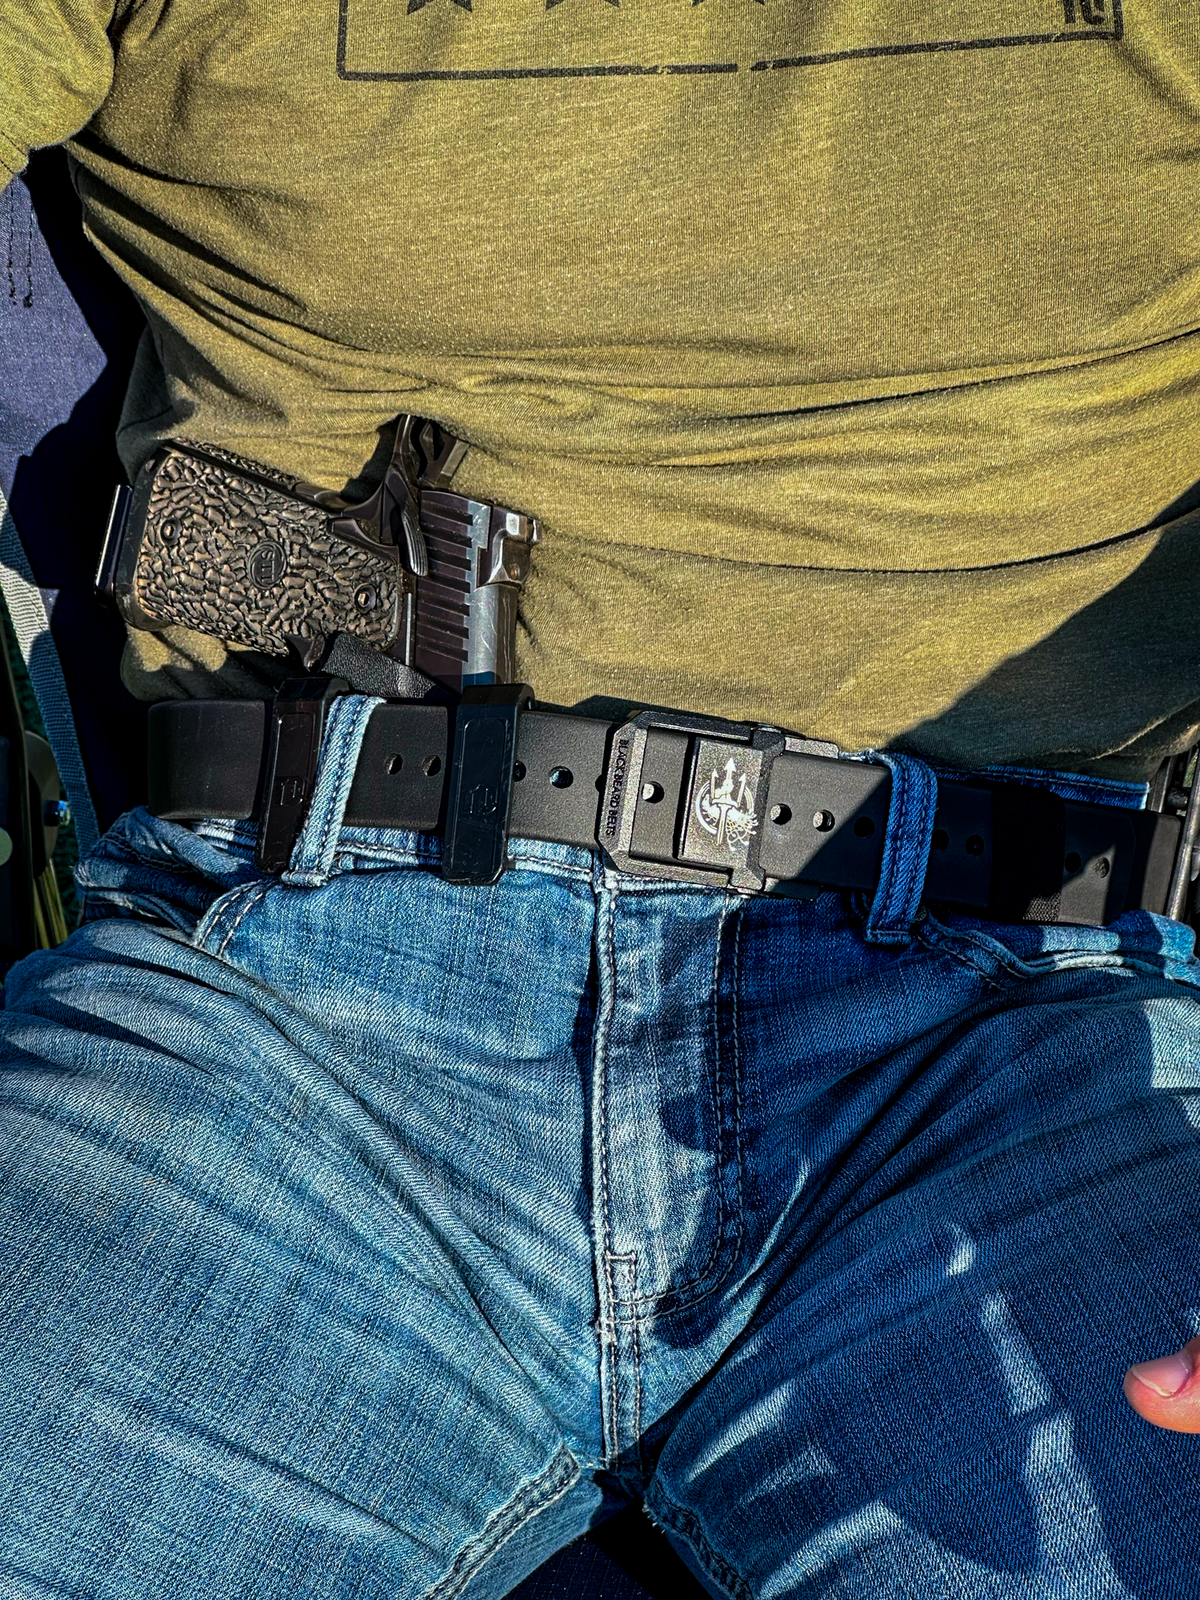 ranger enhanced gun belt costa ludus - 7